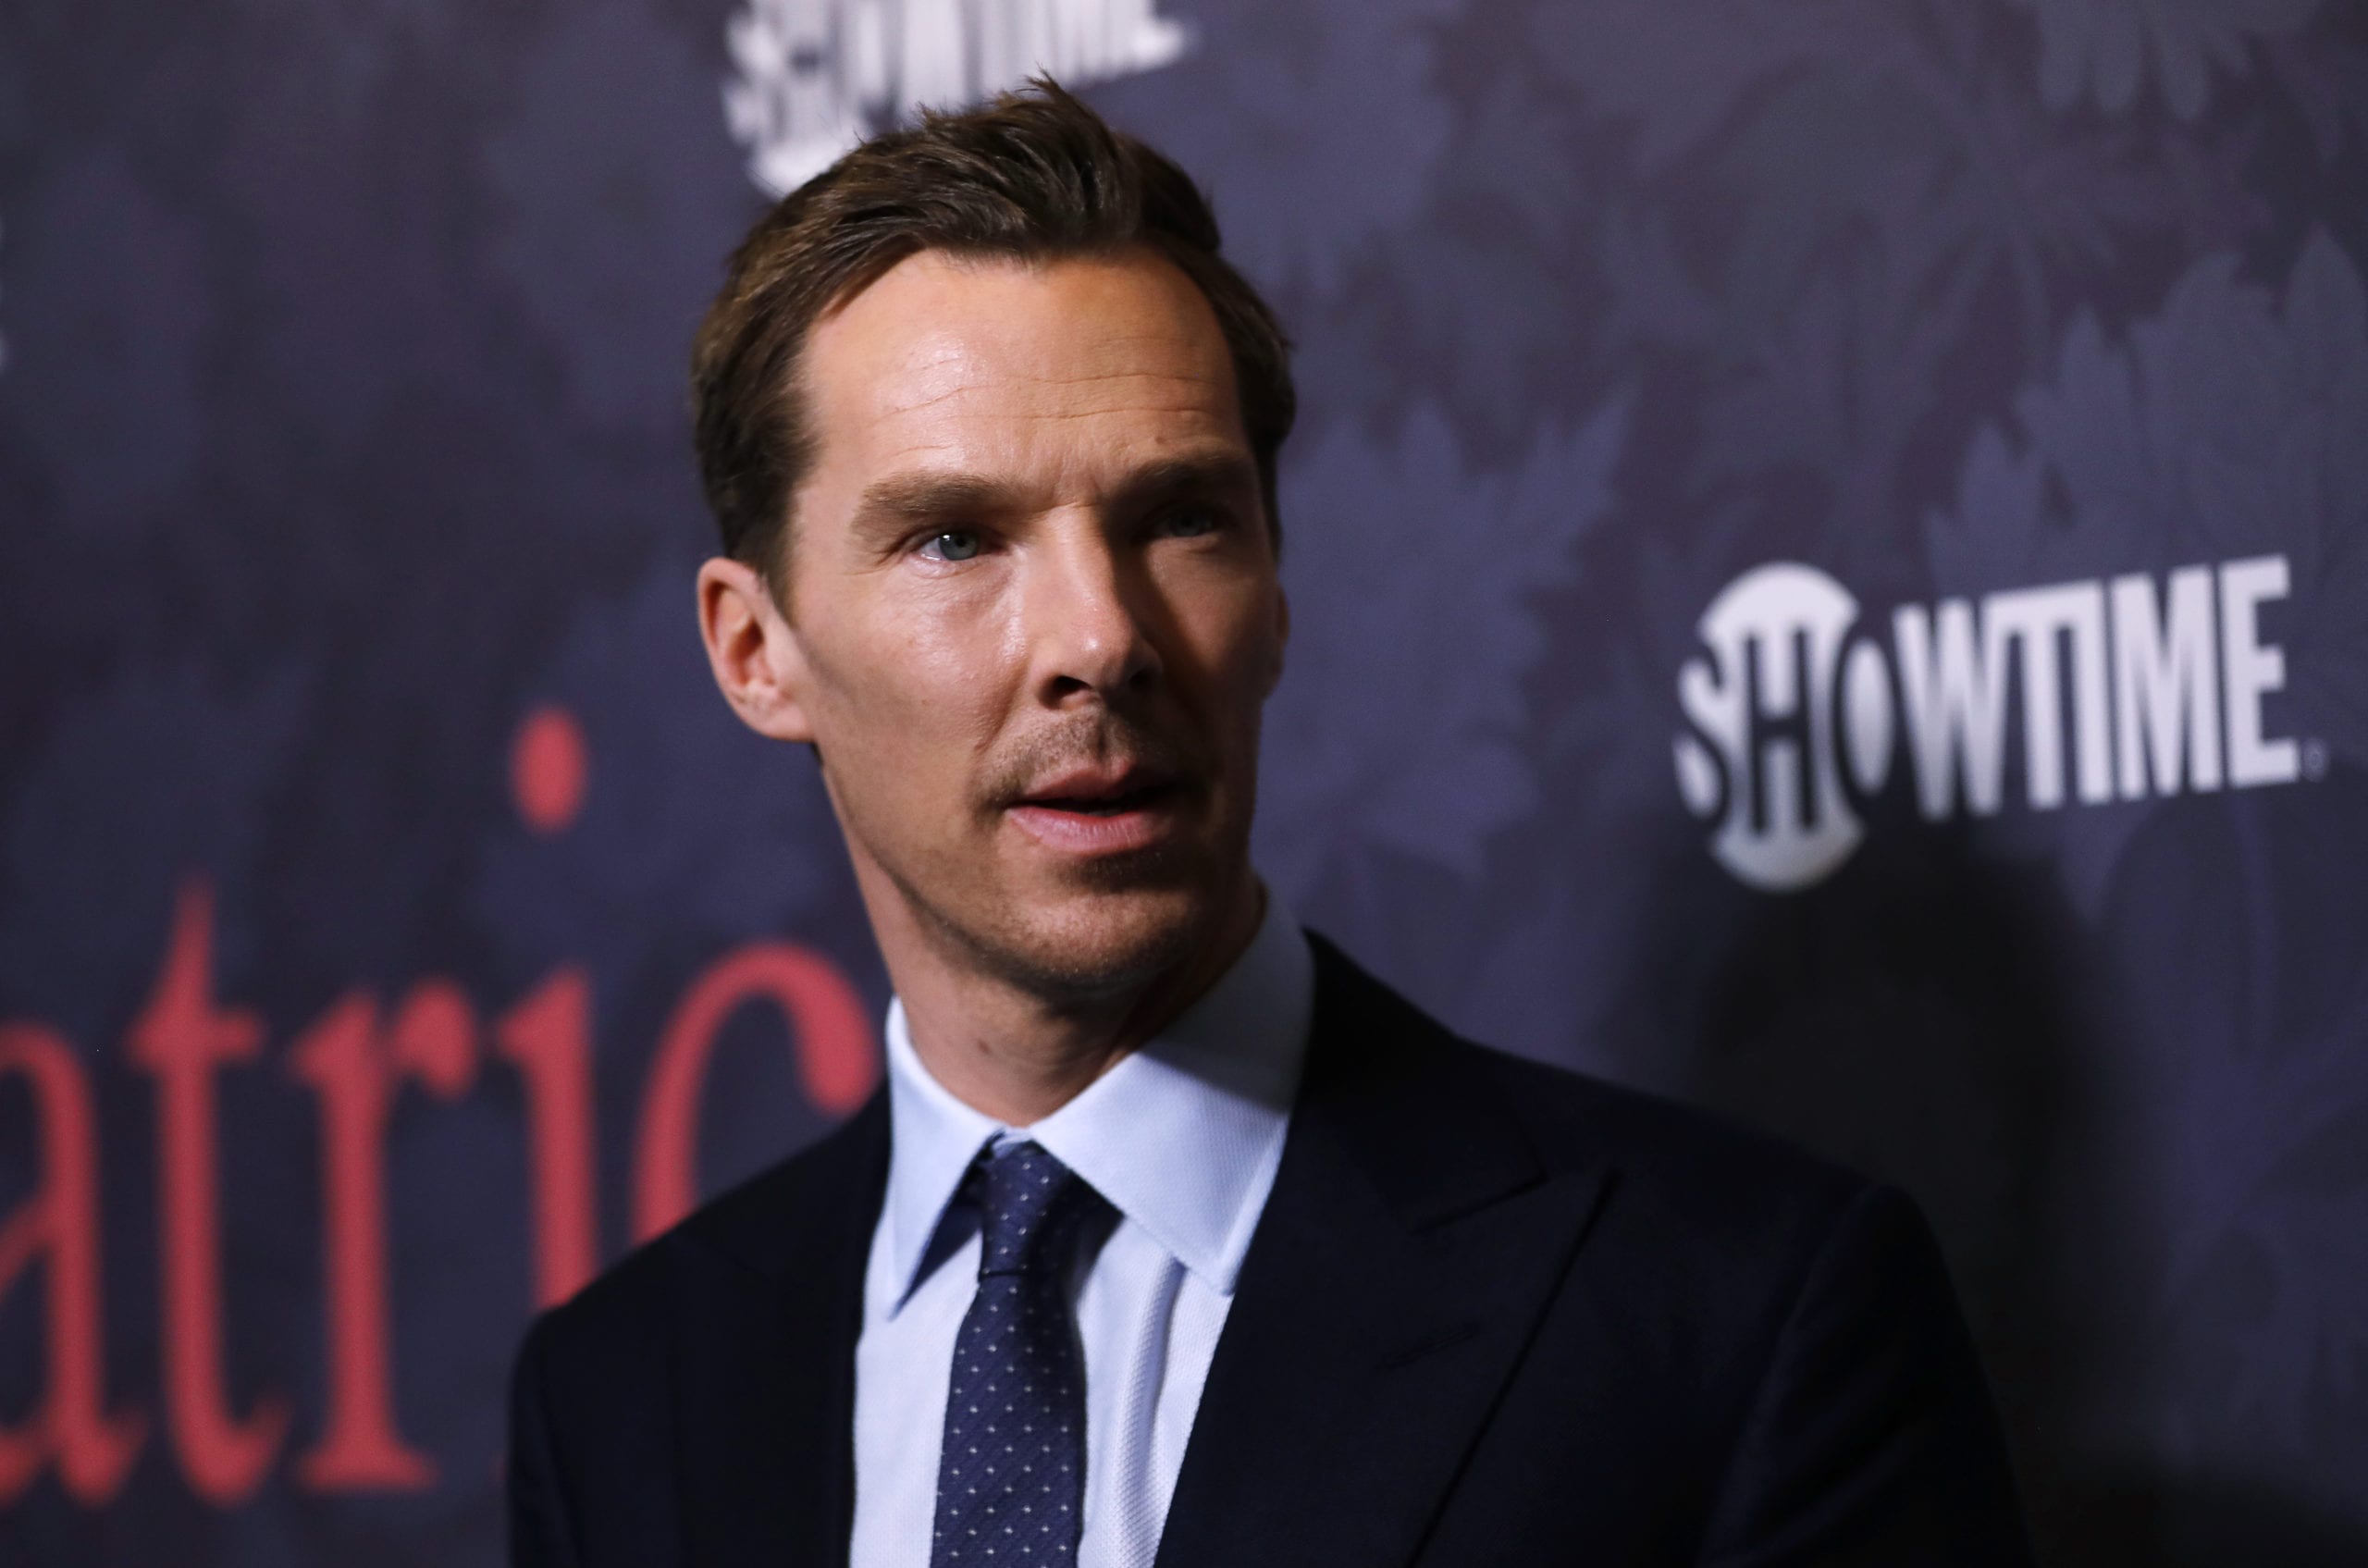 Benedict Cumberbatch says he plans to house Ukrainian refugees